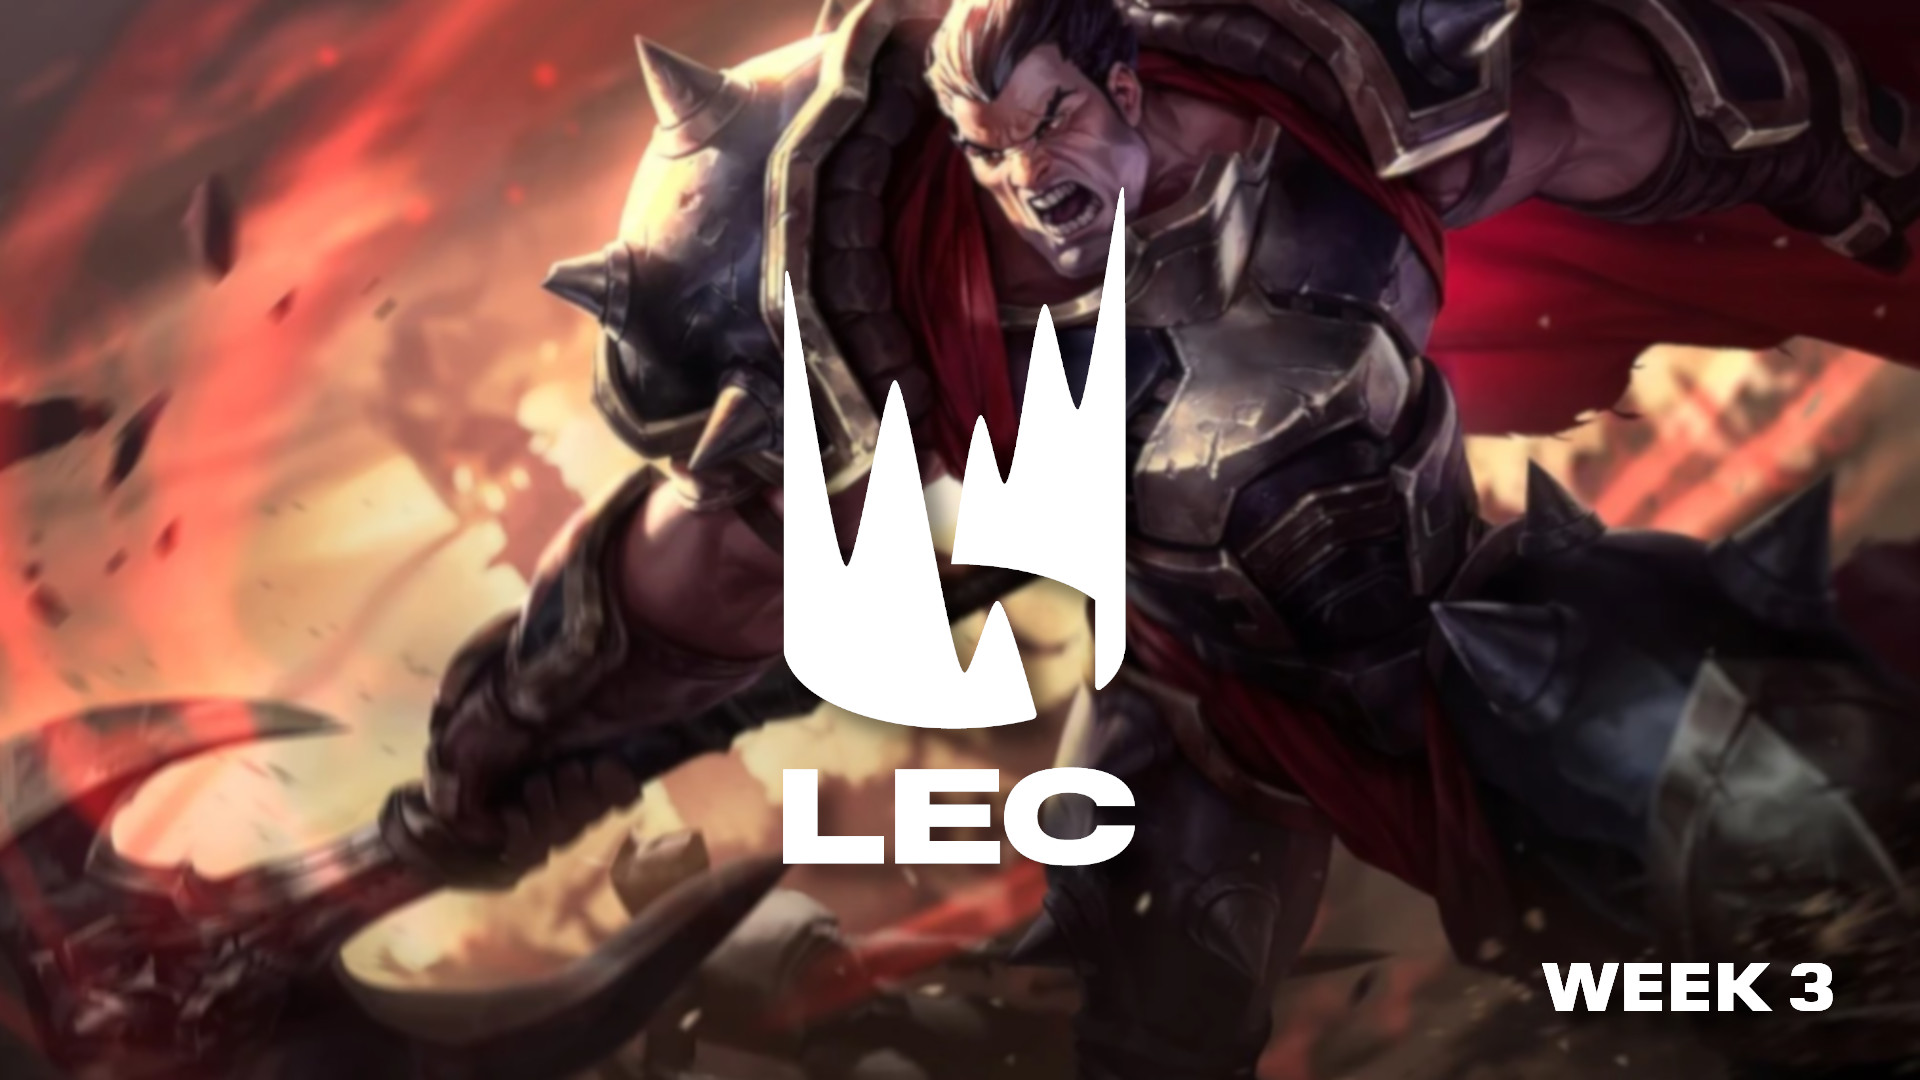 LEC Week 3 graphic featuring Darius